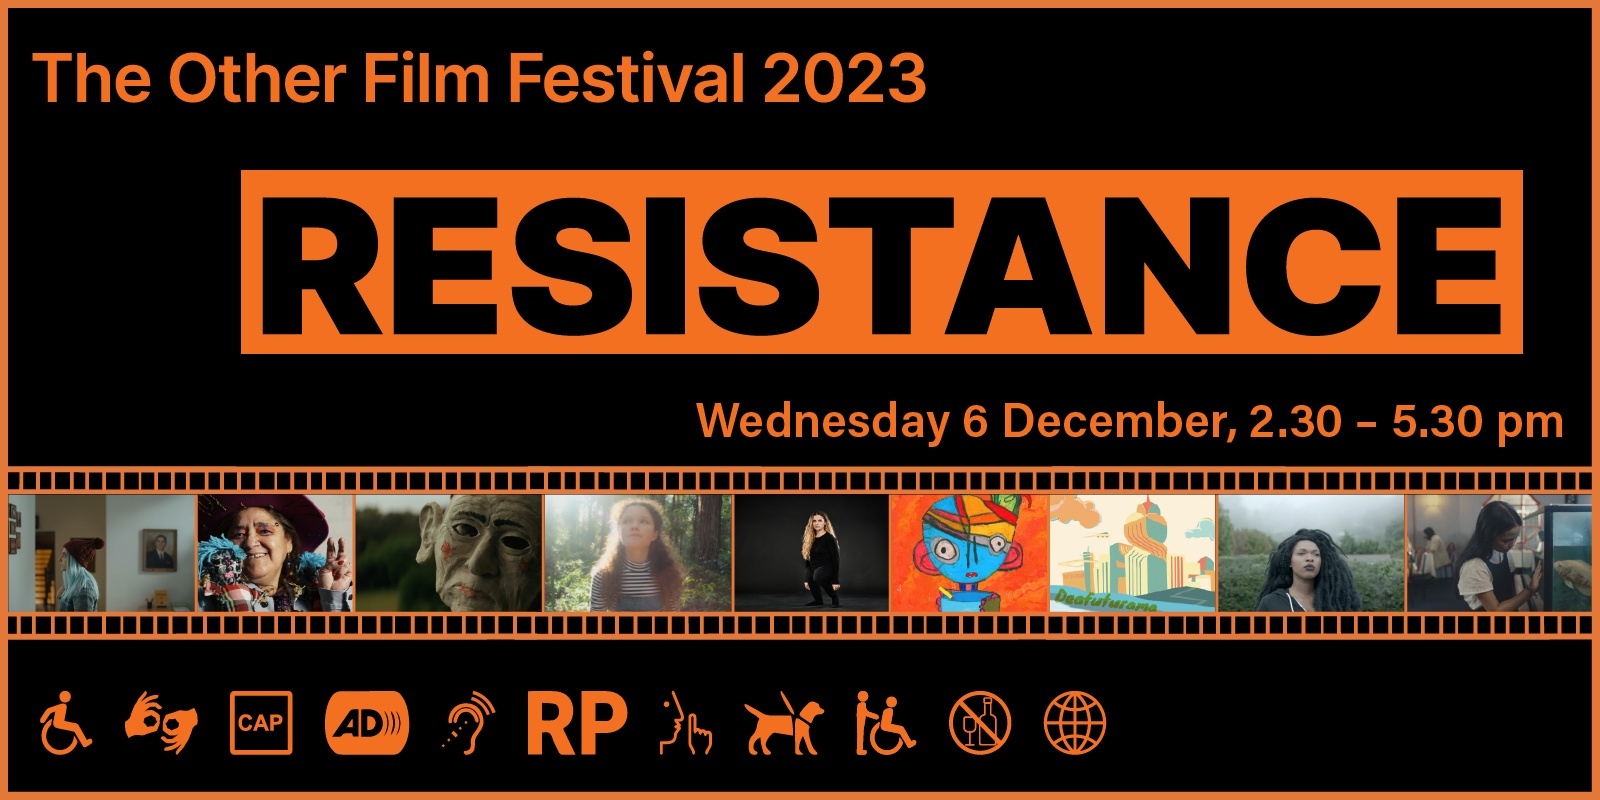 Banner image for Resistance Red Carpet Event 